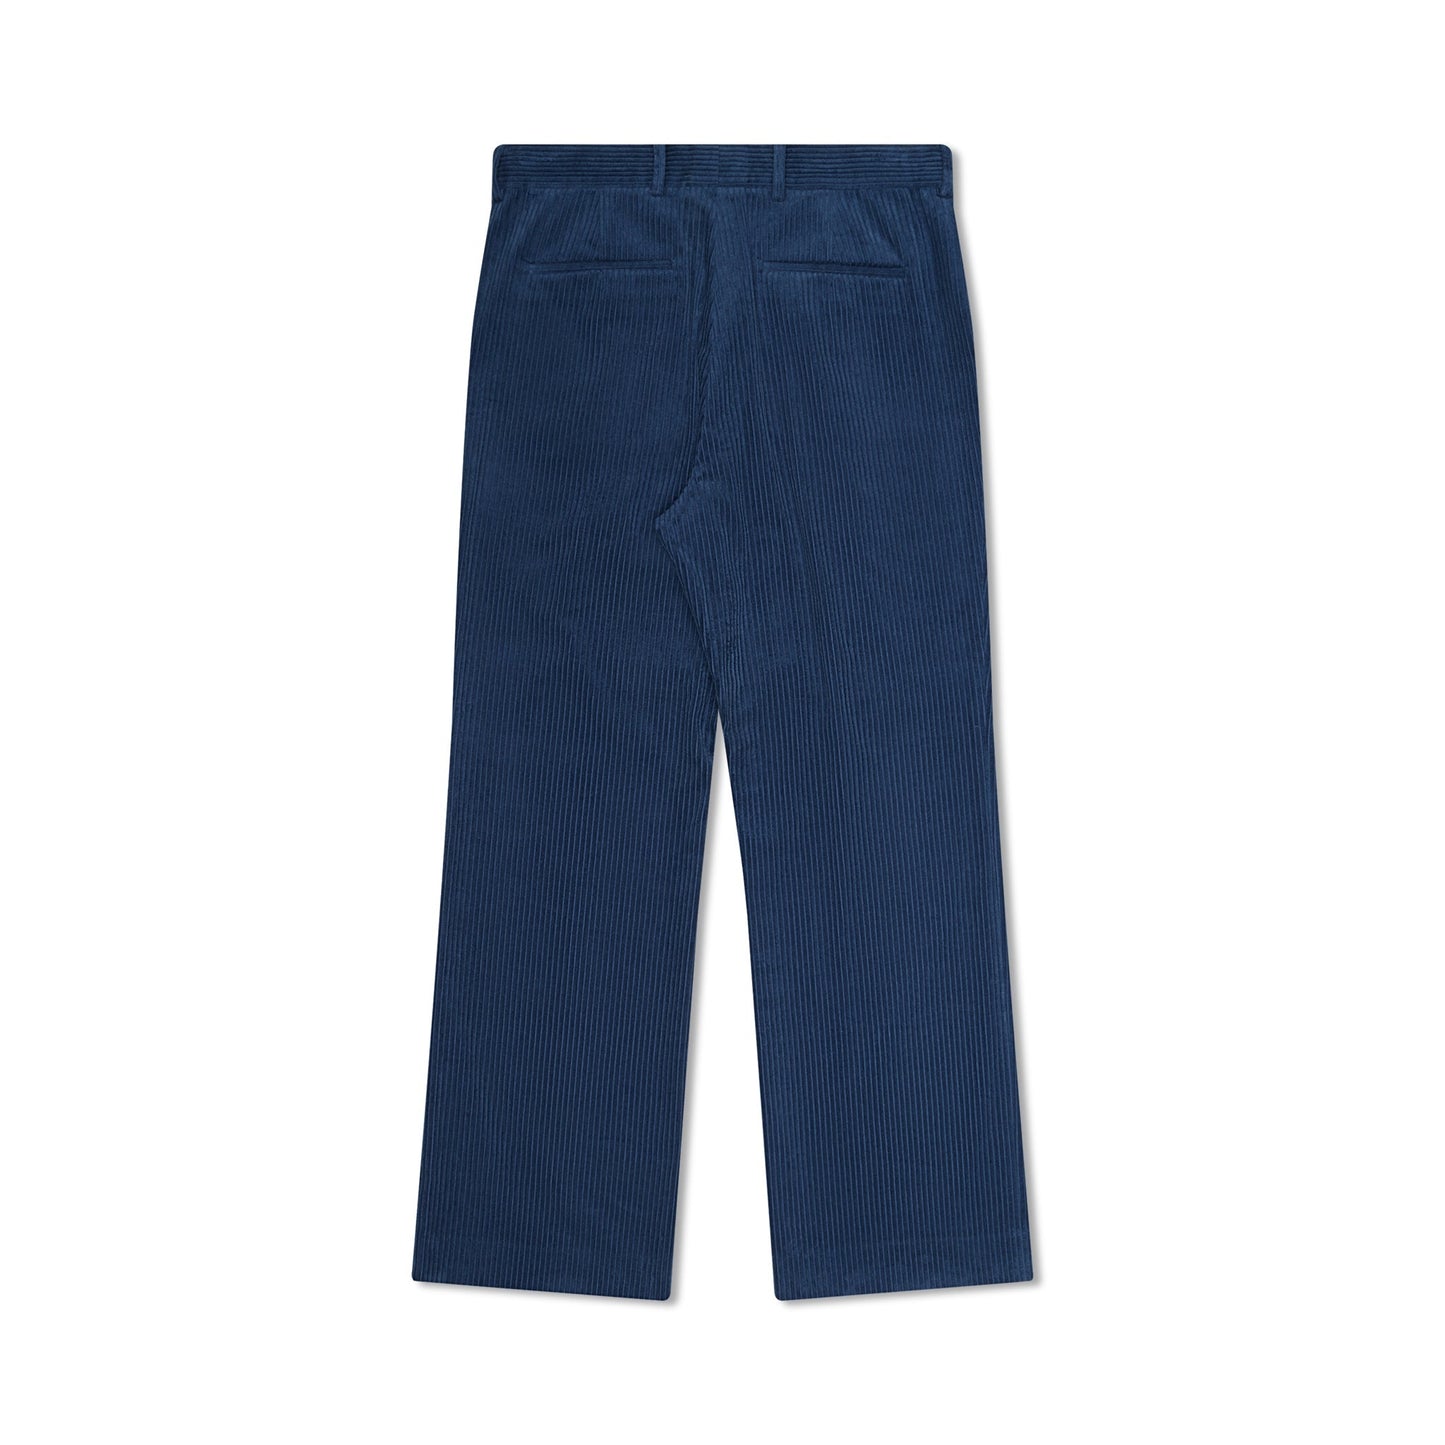 Blue Corduroy Pants - Minted New York